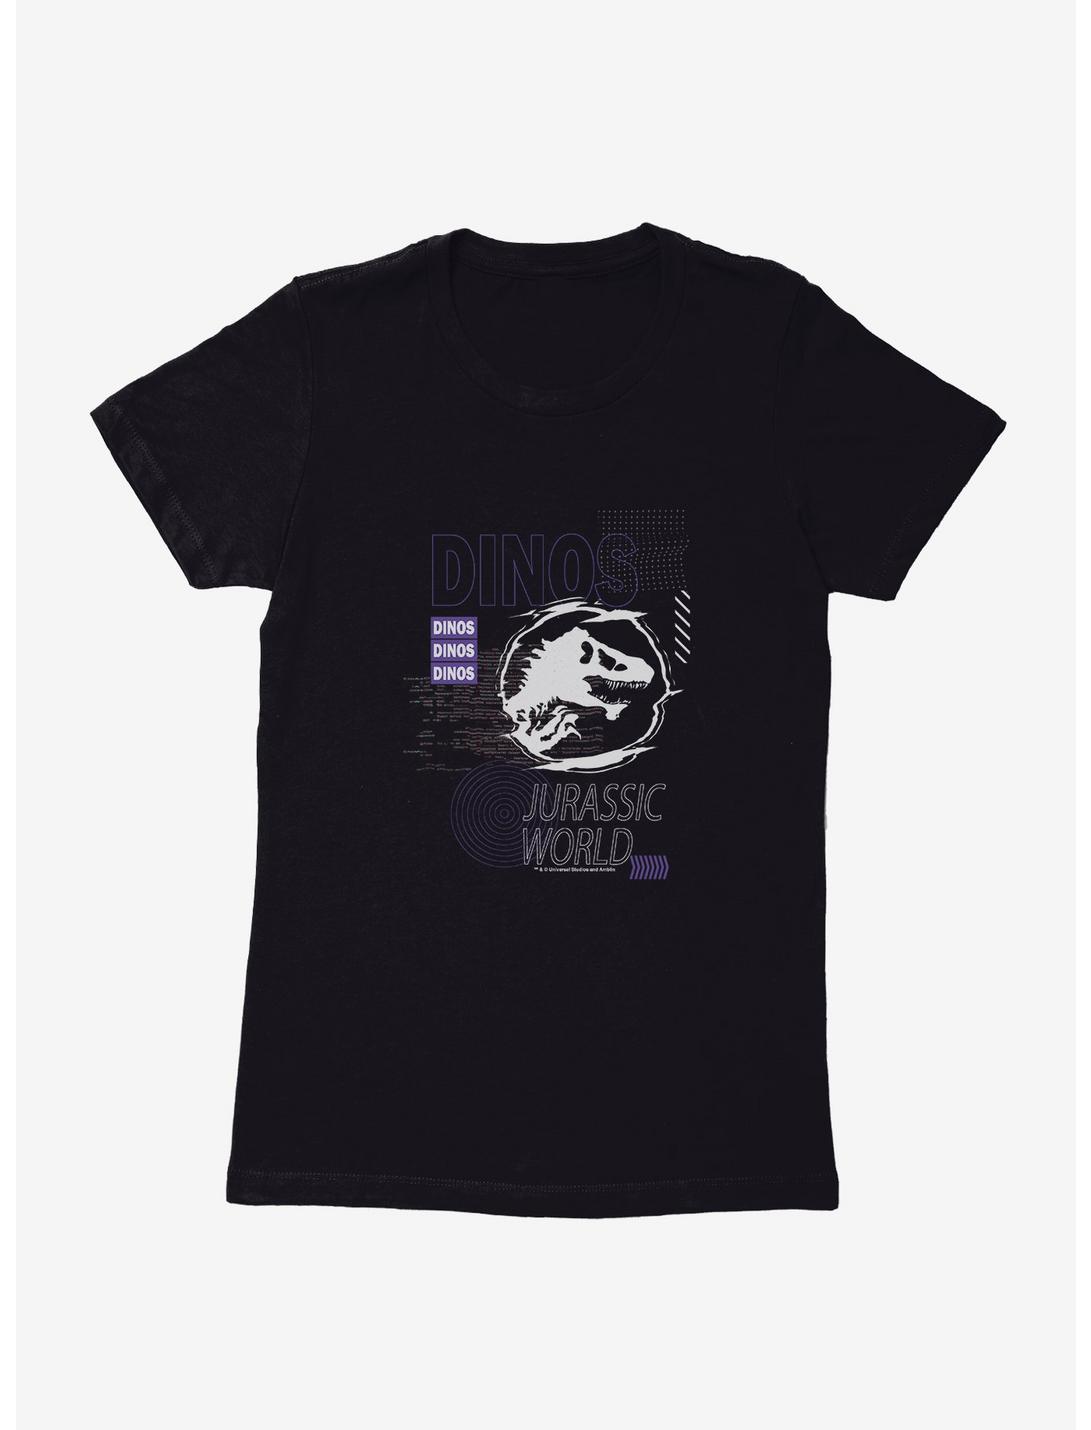 Jurassic Park Dinos World Womens T-Shirt, BLACK, hi-res